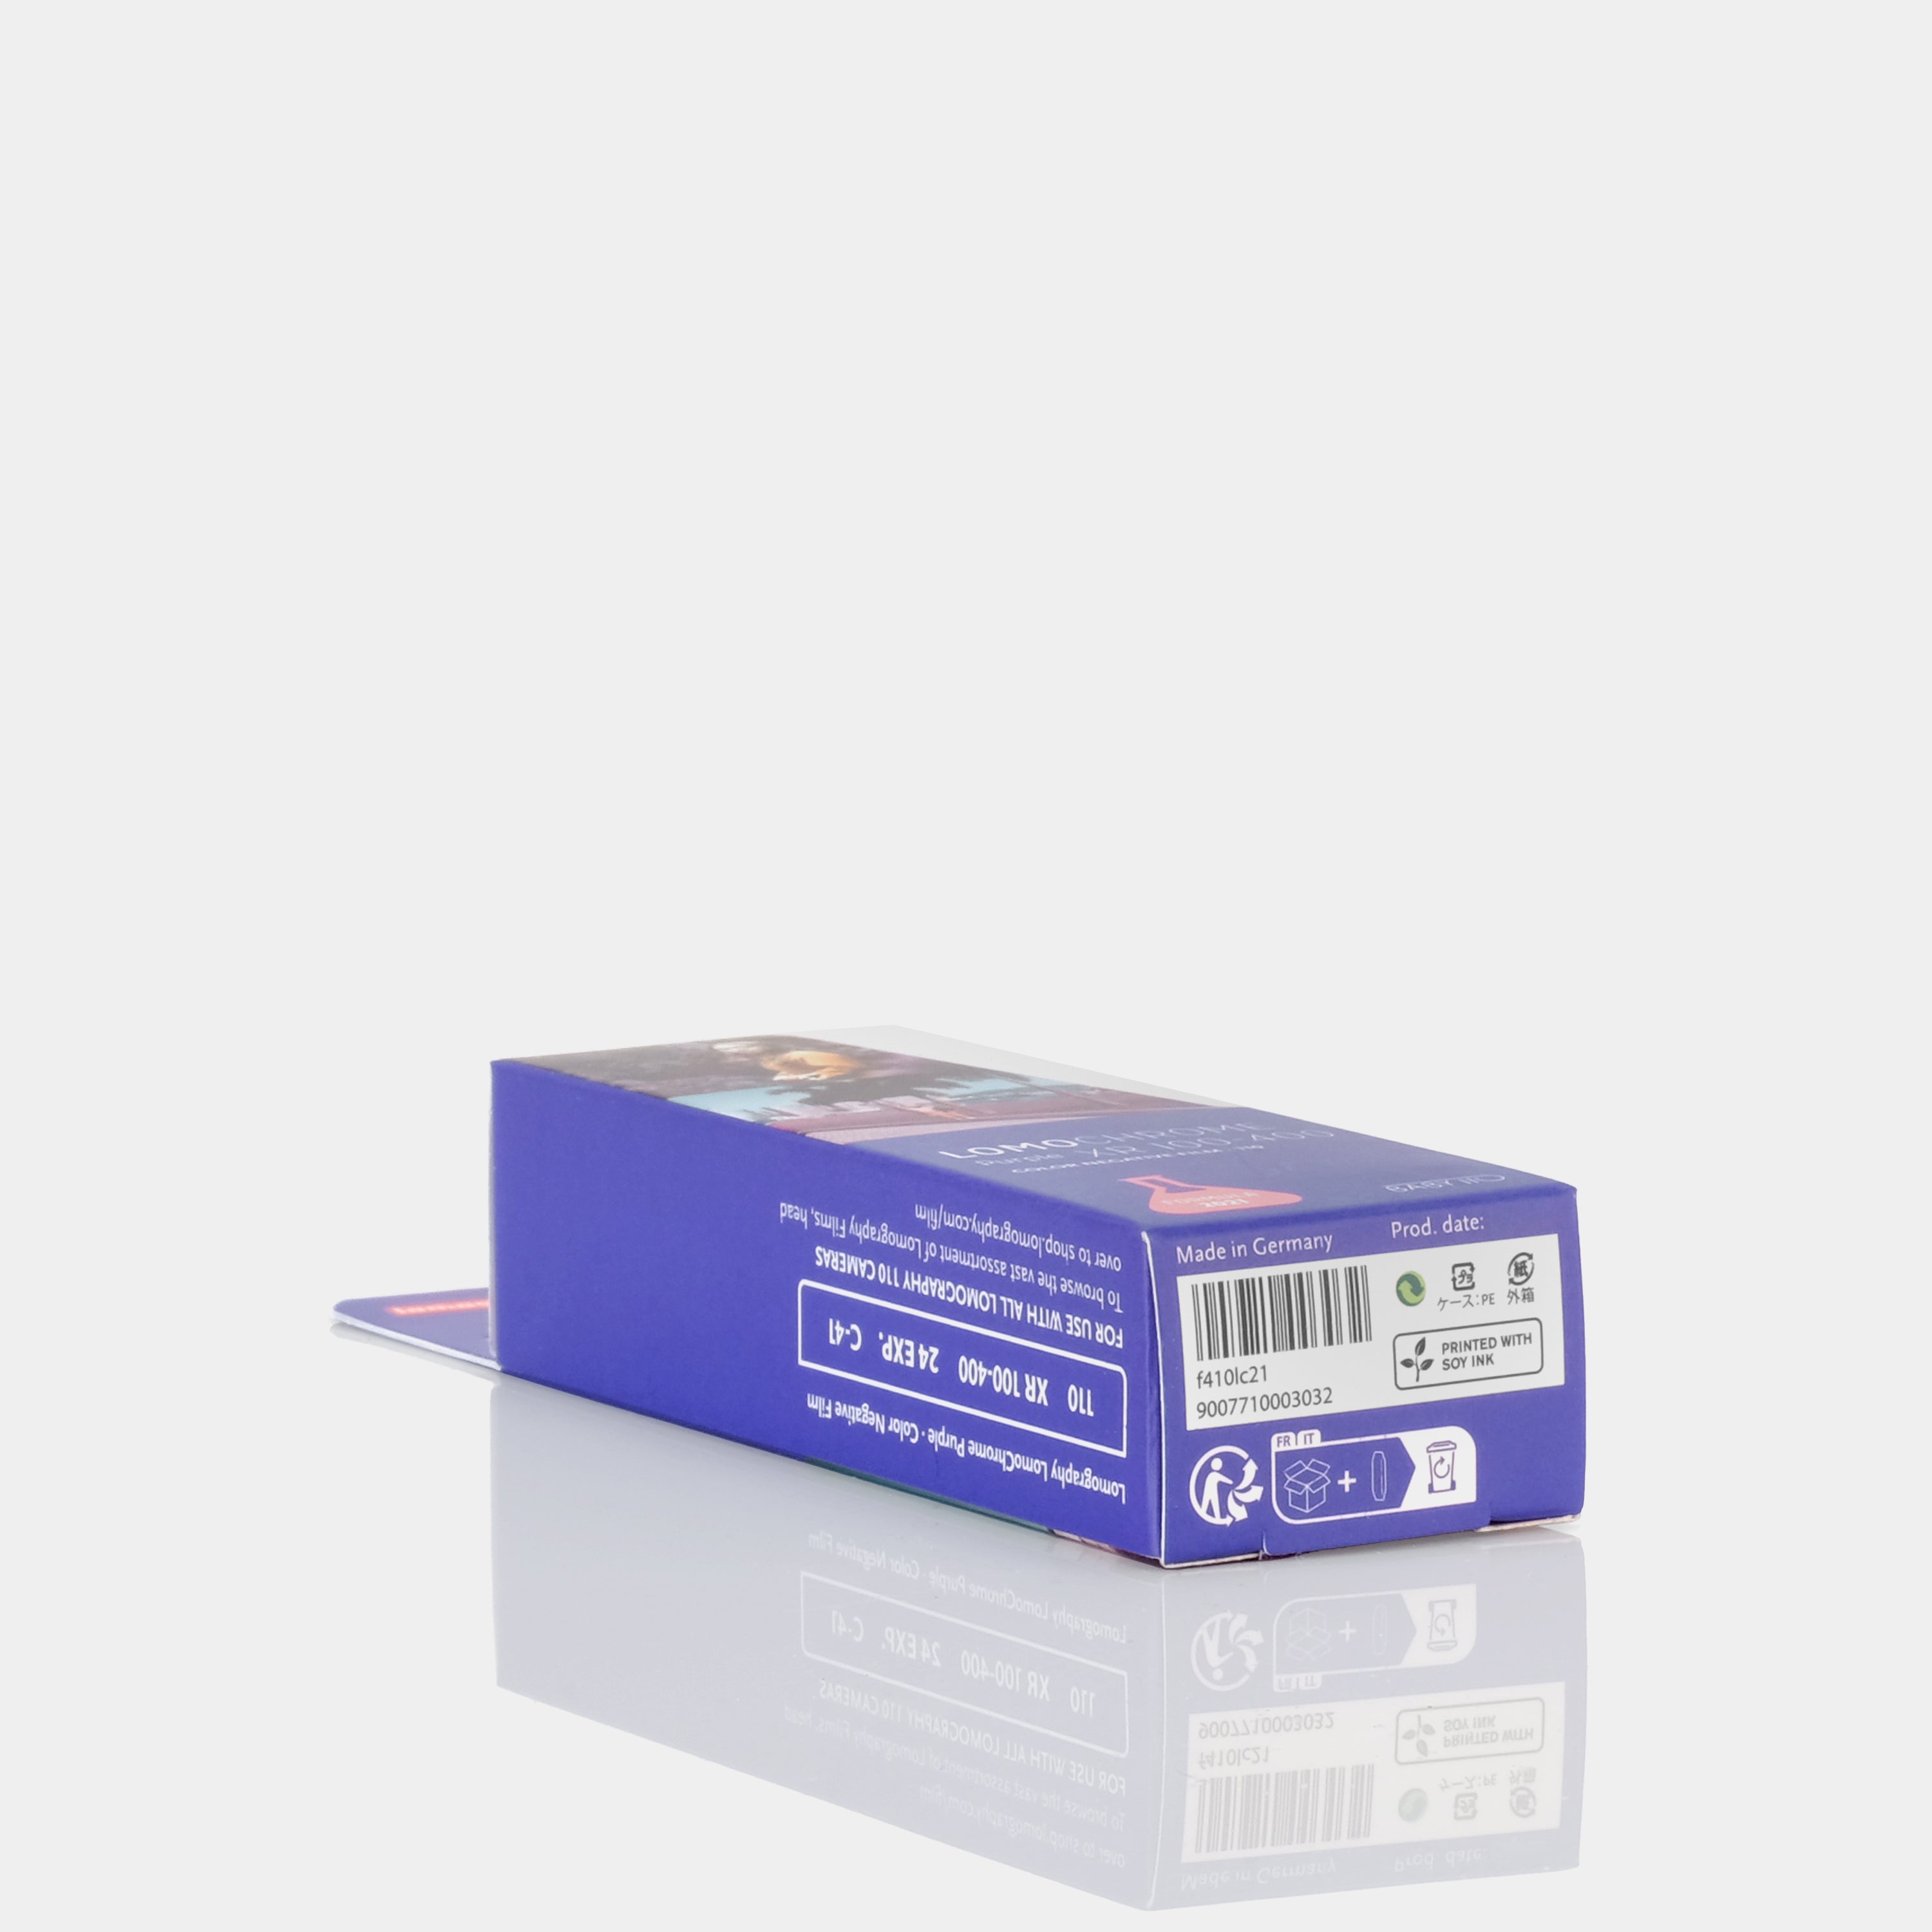 Lomochrome Purple ISO 100-400 110 Film (24 Exposures)